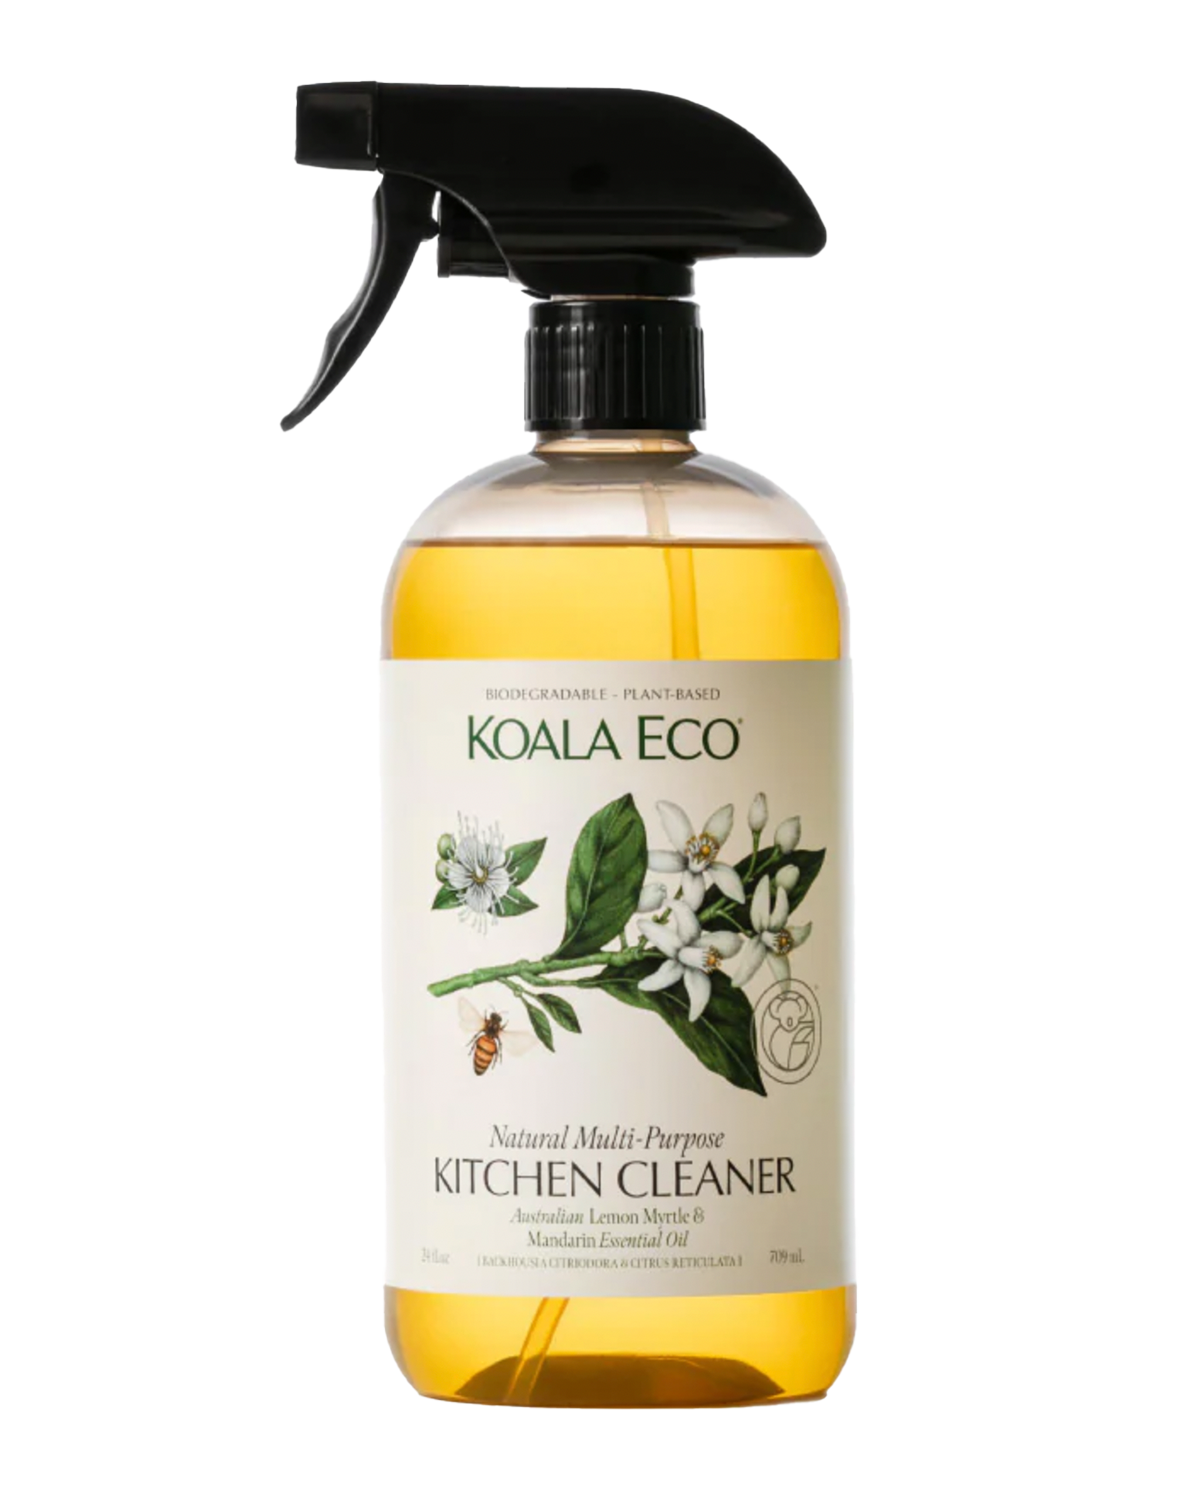 Koala Eco Natural Multi-Purpose Kitchen Cleaner 24oz